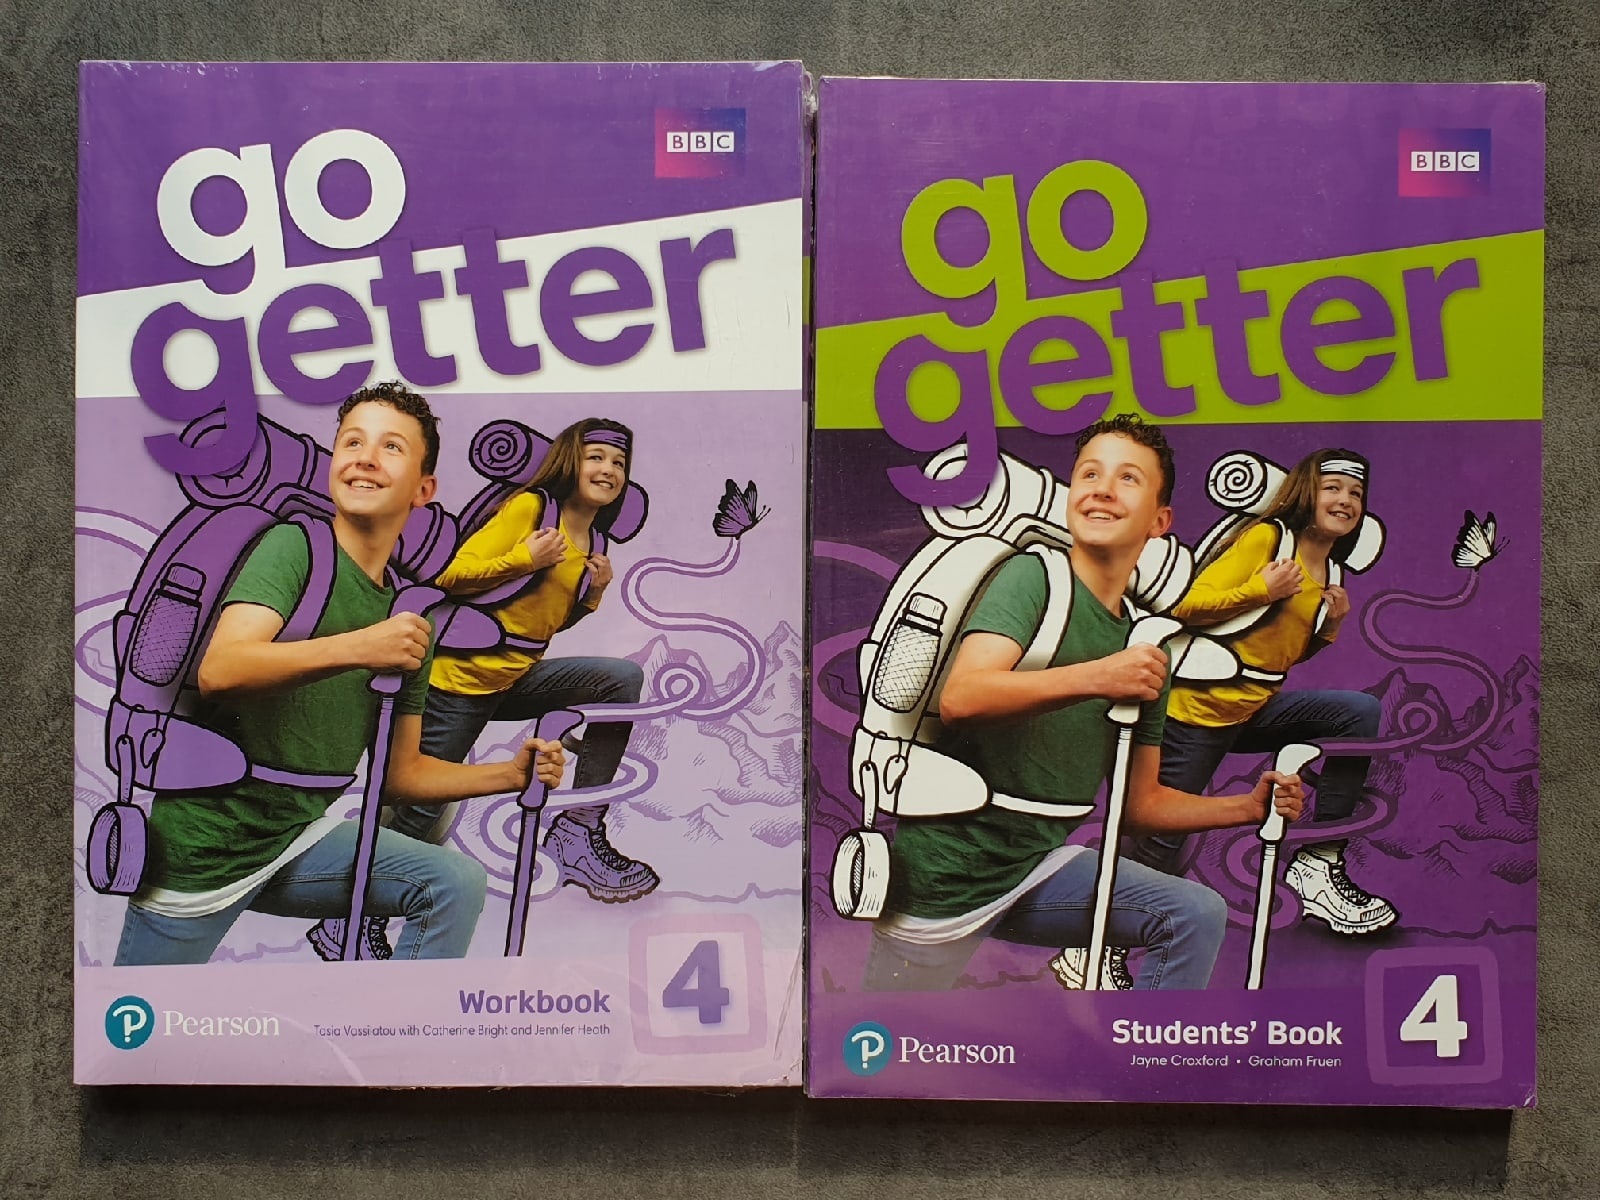 Go getter shopping. Учебник Pearson go Getter. Go Getter 1 Workbook. Go Getter 3 student's book. Учебник go Getter 4.